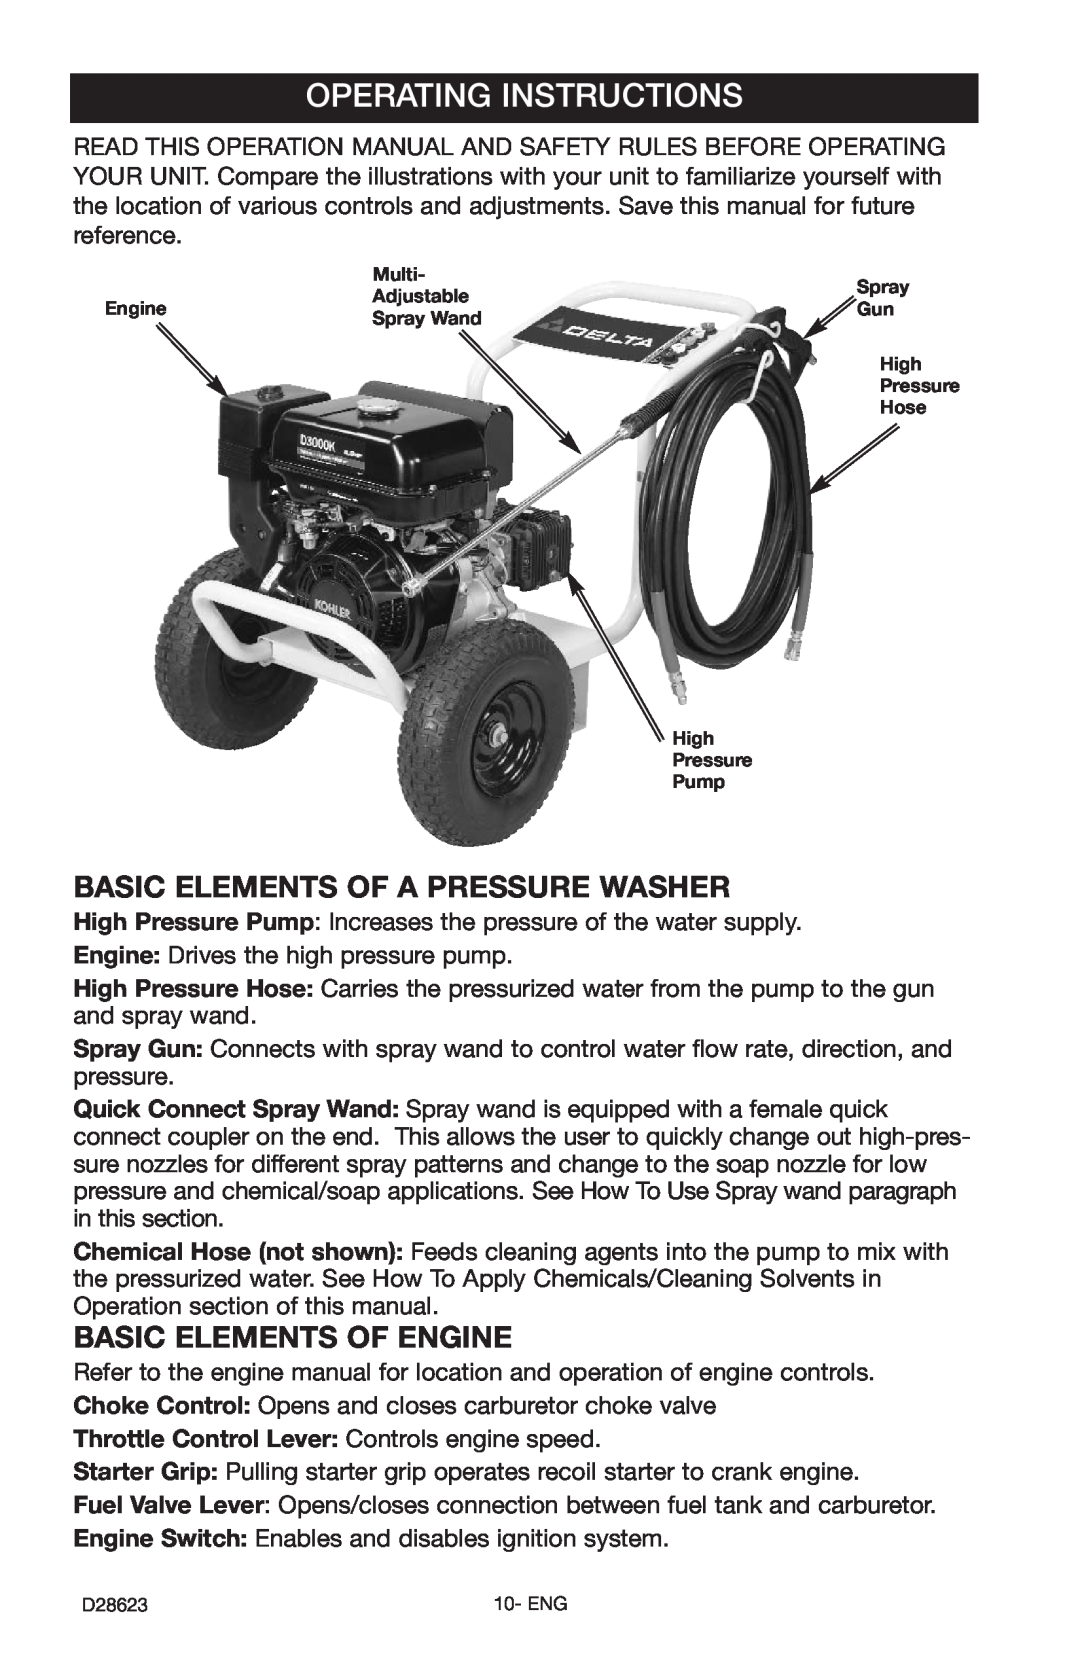 Delta D28623 instruction manual Operating Instructions, Basic Elements Of A Pressure Washer, Basic Elements Of Engine 